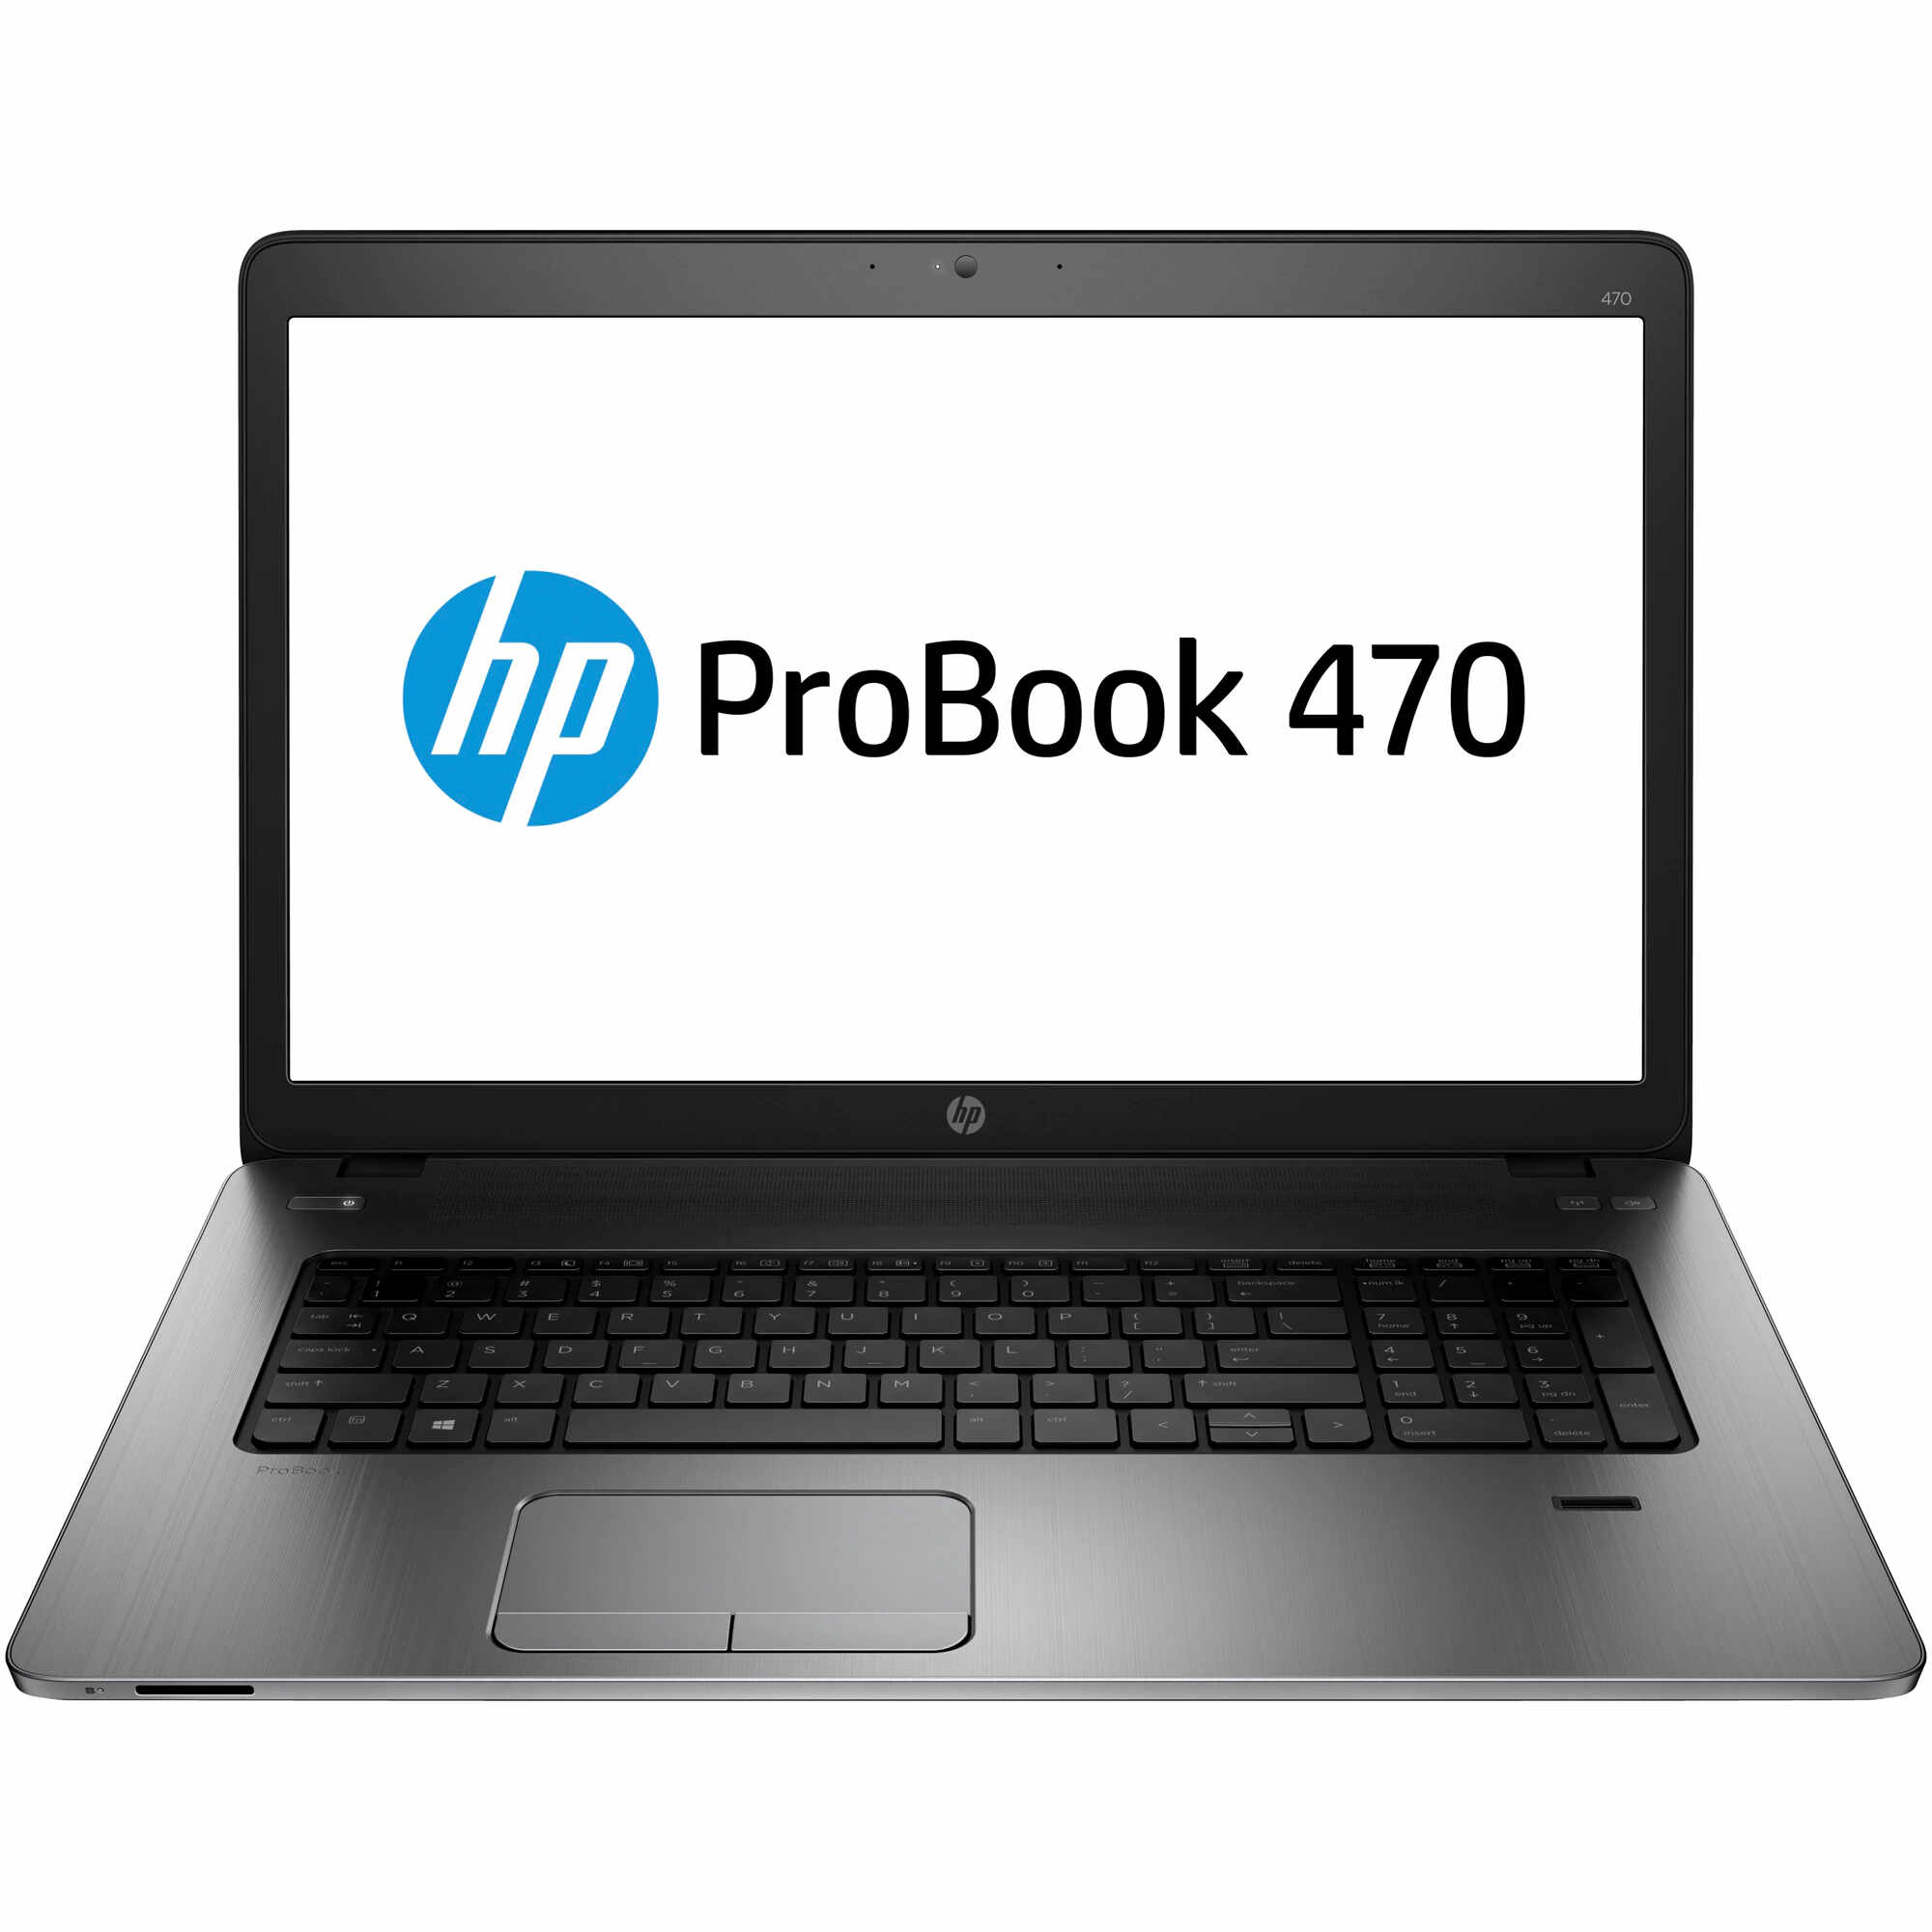 Laptop HP ProBook 470 G2, Intel Core i5-4210U 1.70GHz, 4GB DDR3, 120GB SSD, DVD-RW, 17.3 Inch, Webcam, Tastatura Numerica, Grad A-